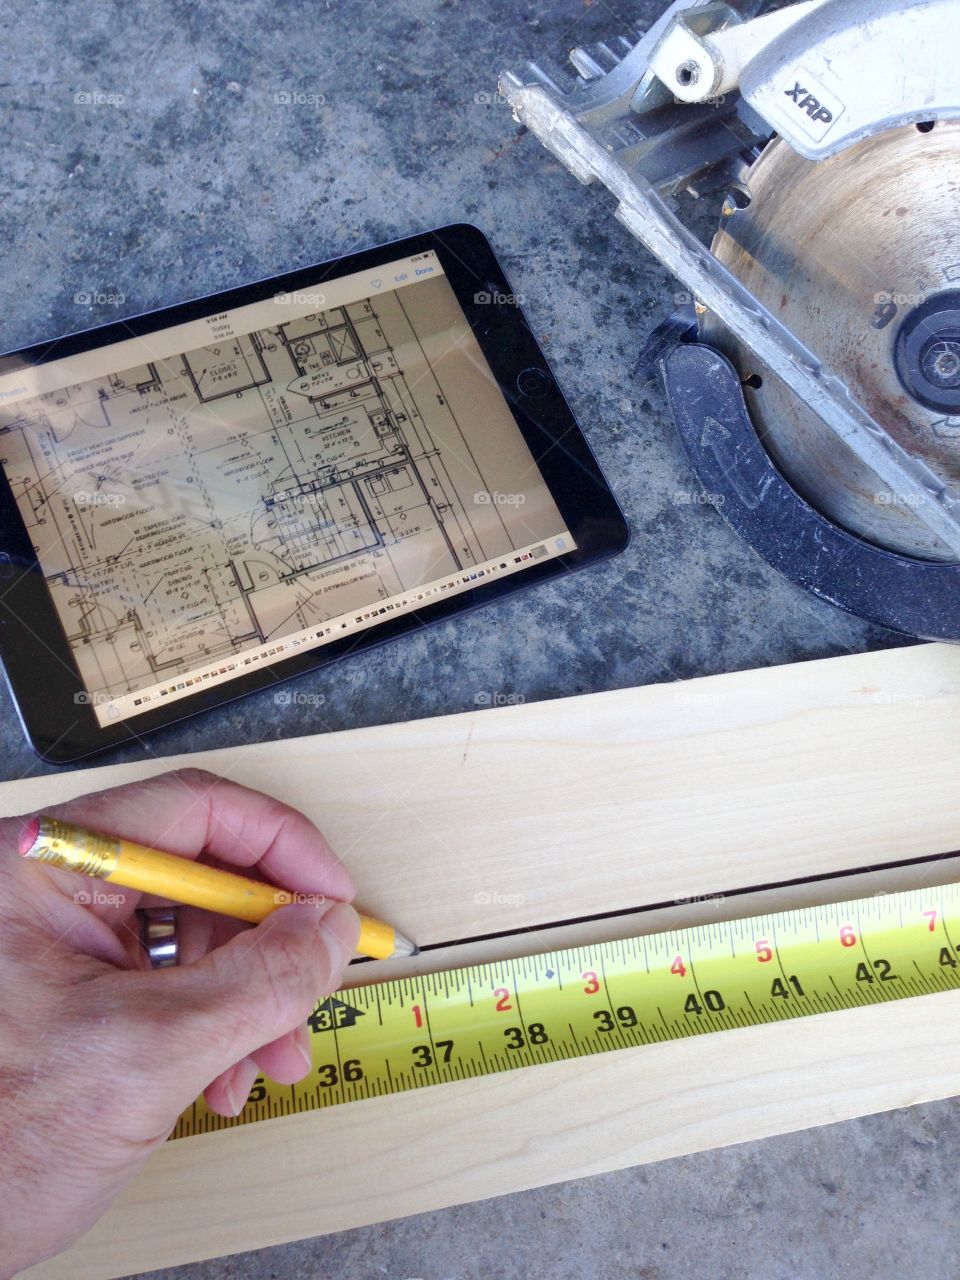 Using iPad for blueprints